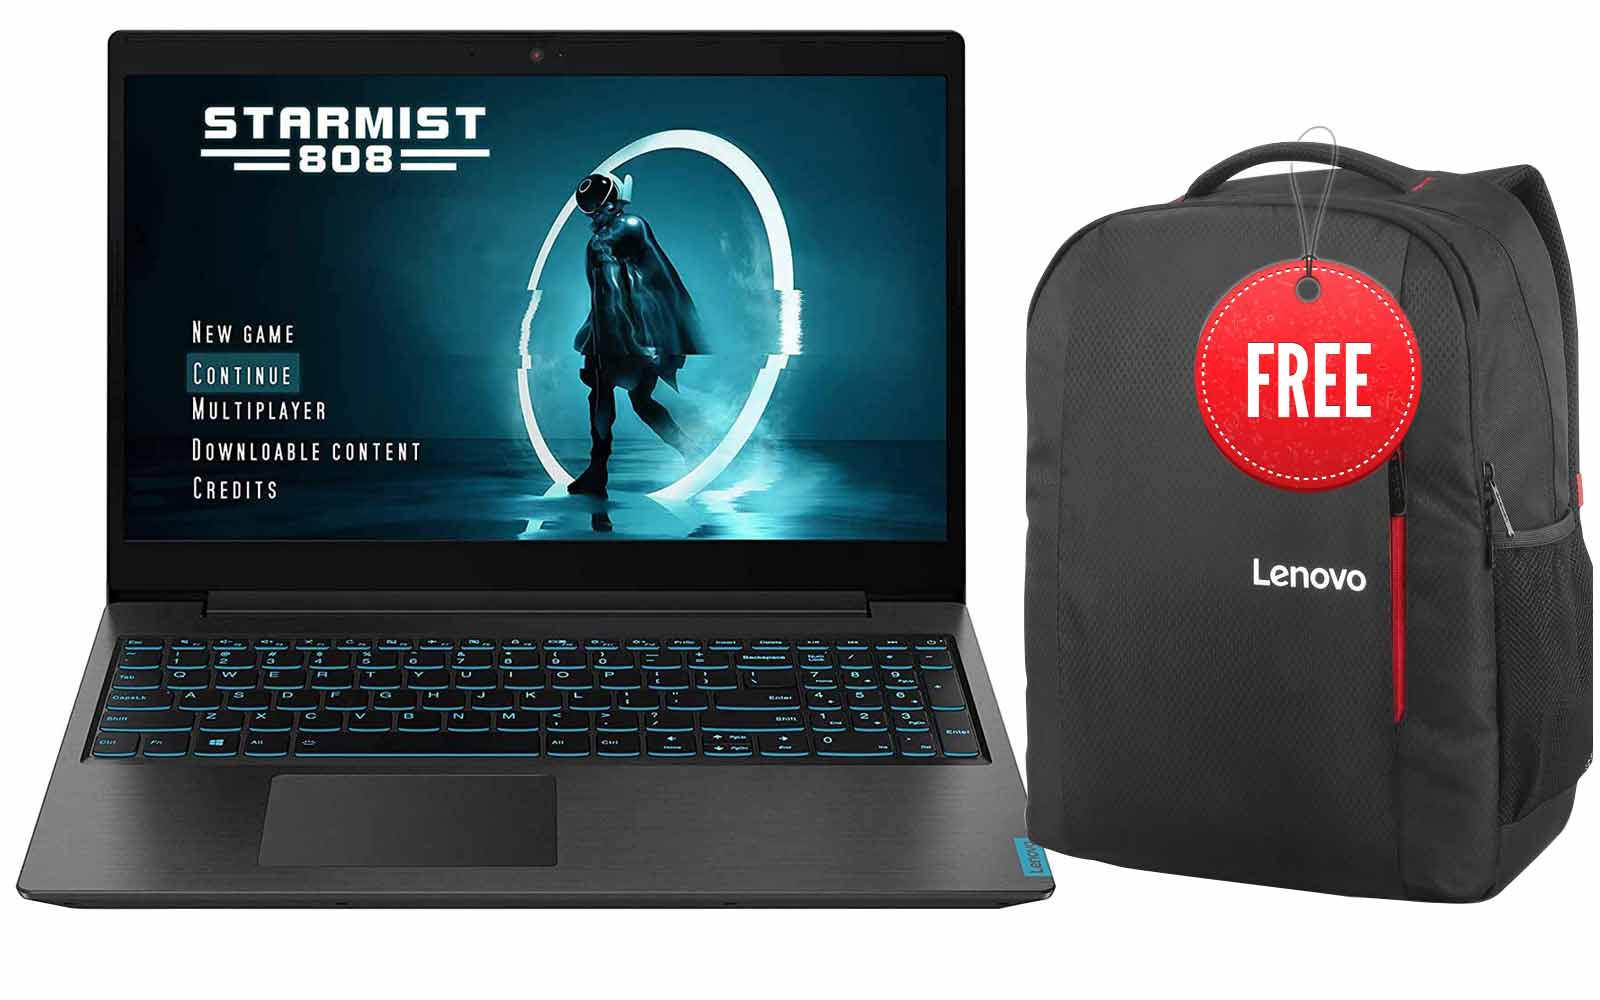 Lenovo-IdeaPad-L340-Gaming-Intel-Core-i5-9th-Gen-Windows-10-Laptop-6-bag-free